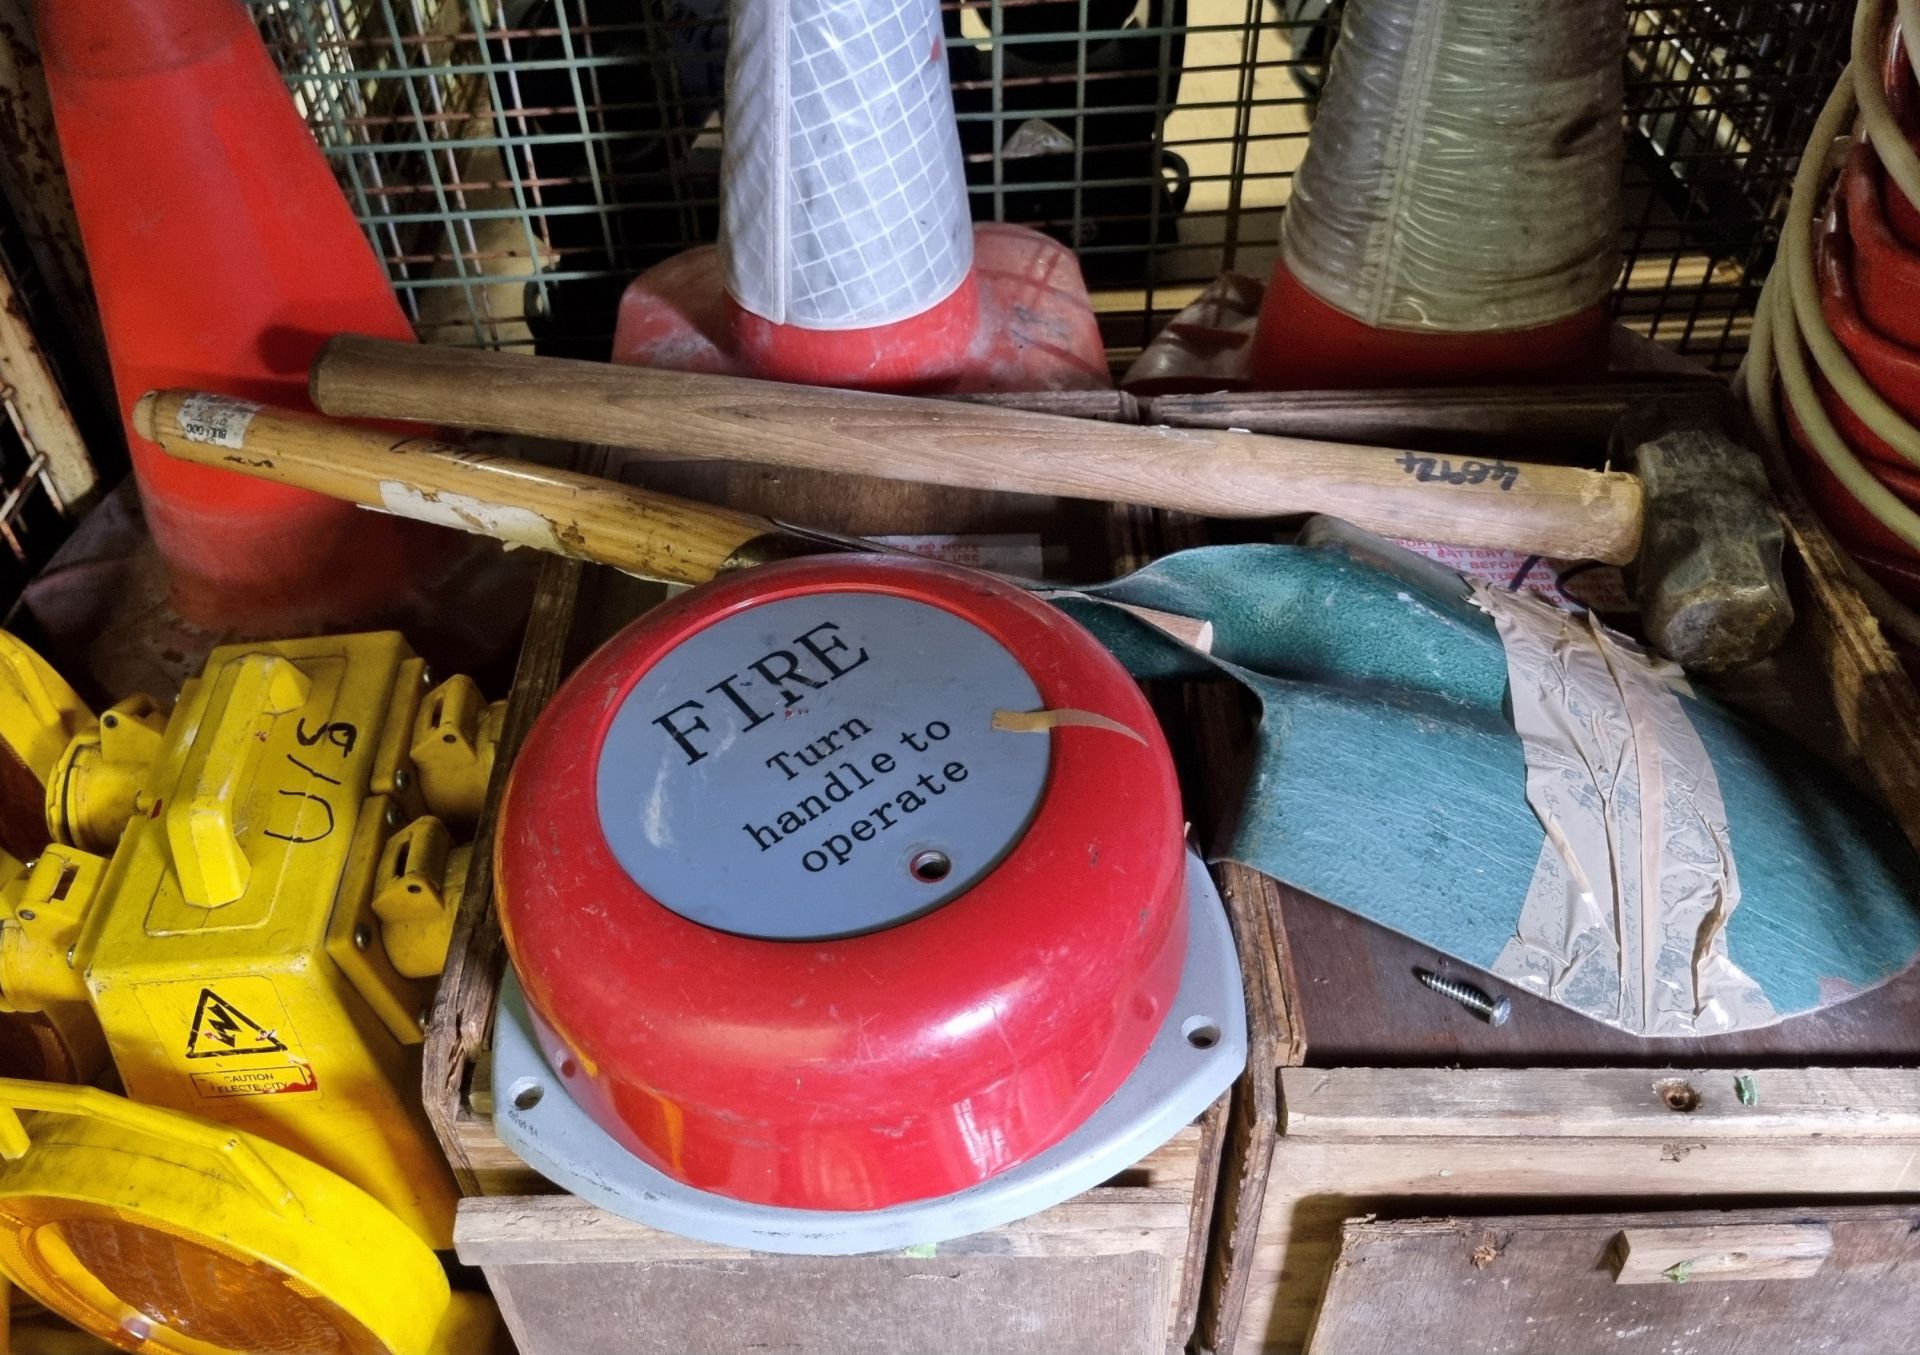 Fire & rescue equipment - fire bells, fire buckets, traffic cones, hazard lights, winder reel - Image 6 of 6